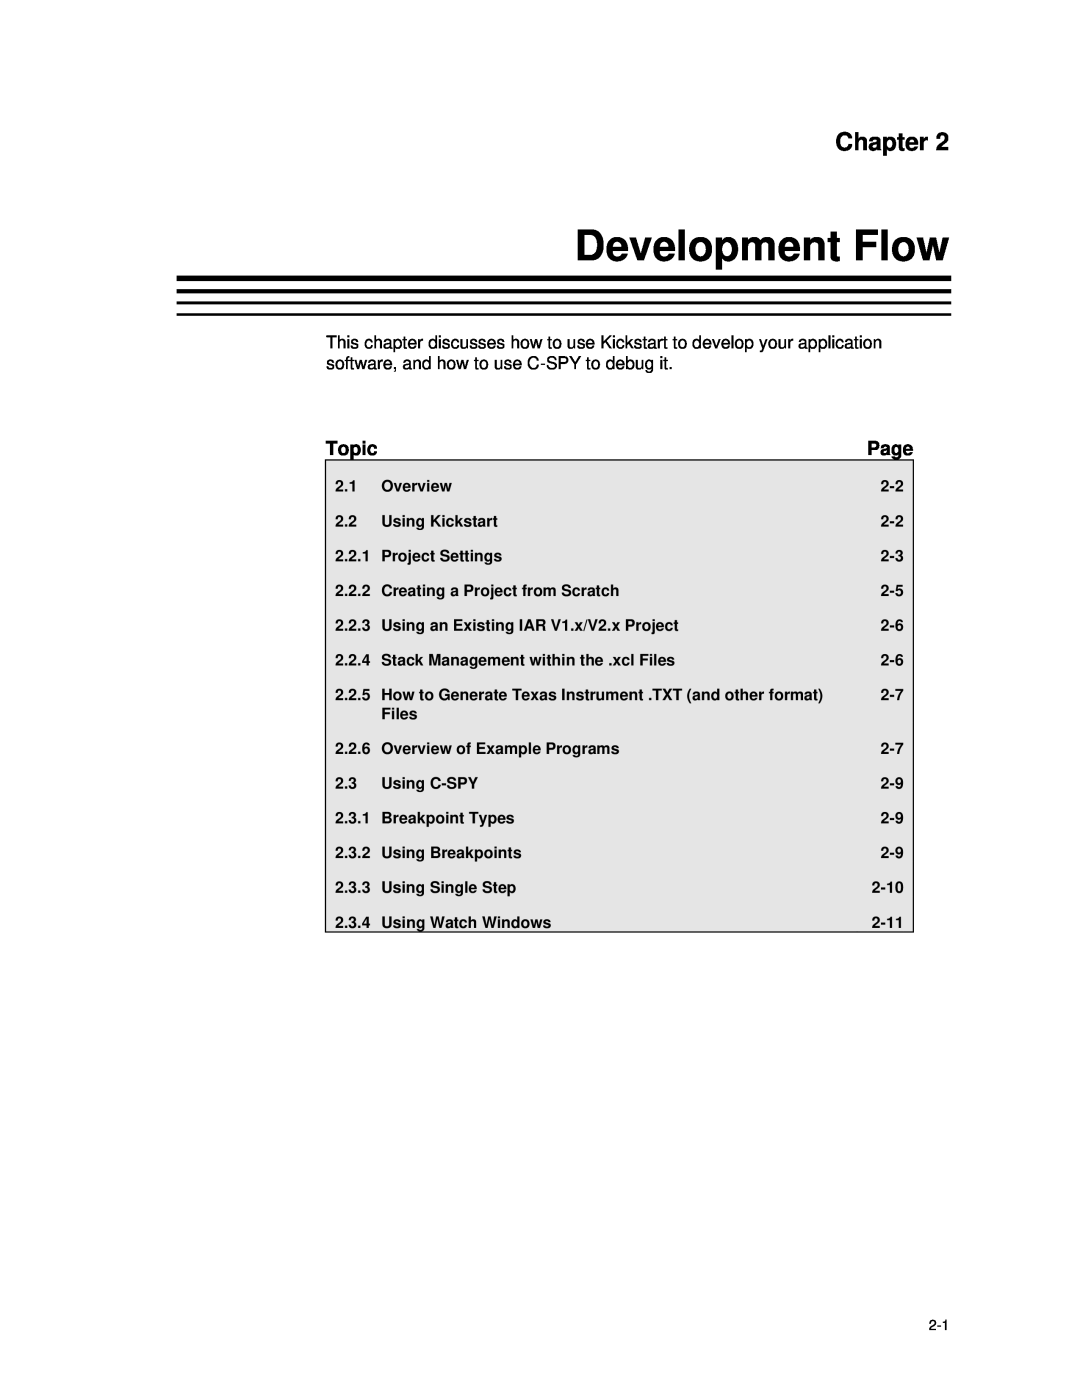 Texas Instruments MSP-FET430 manual Development Flow, Chapter 